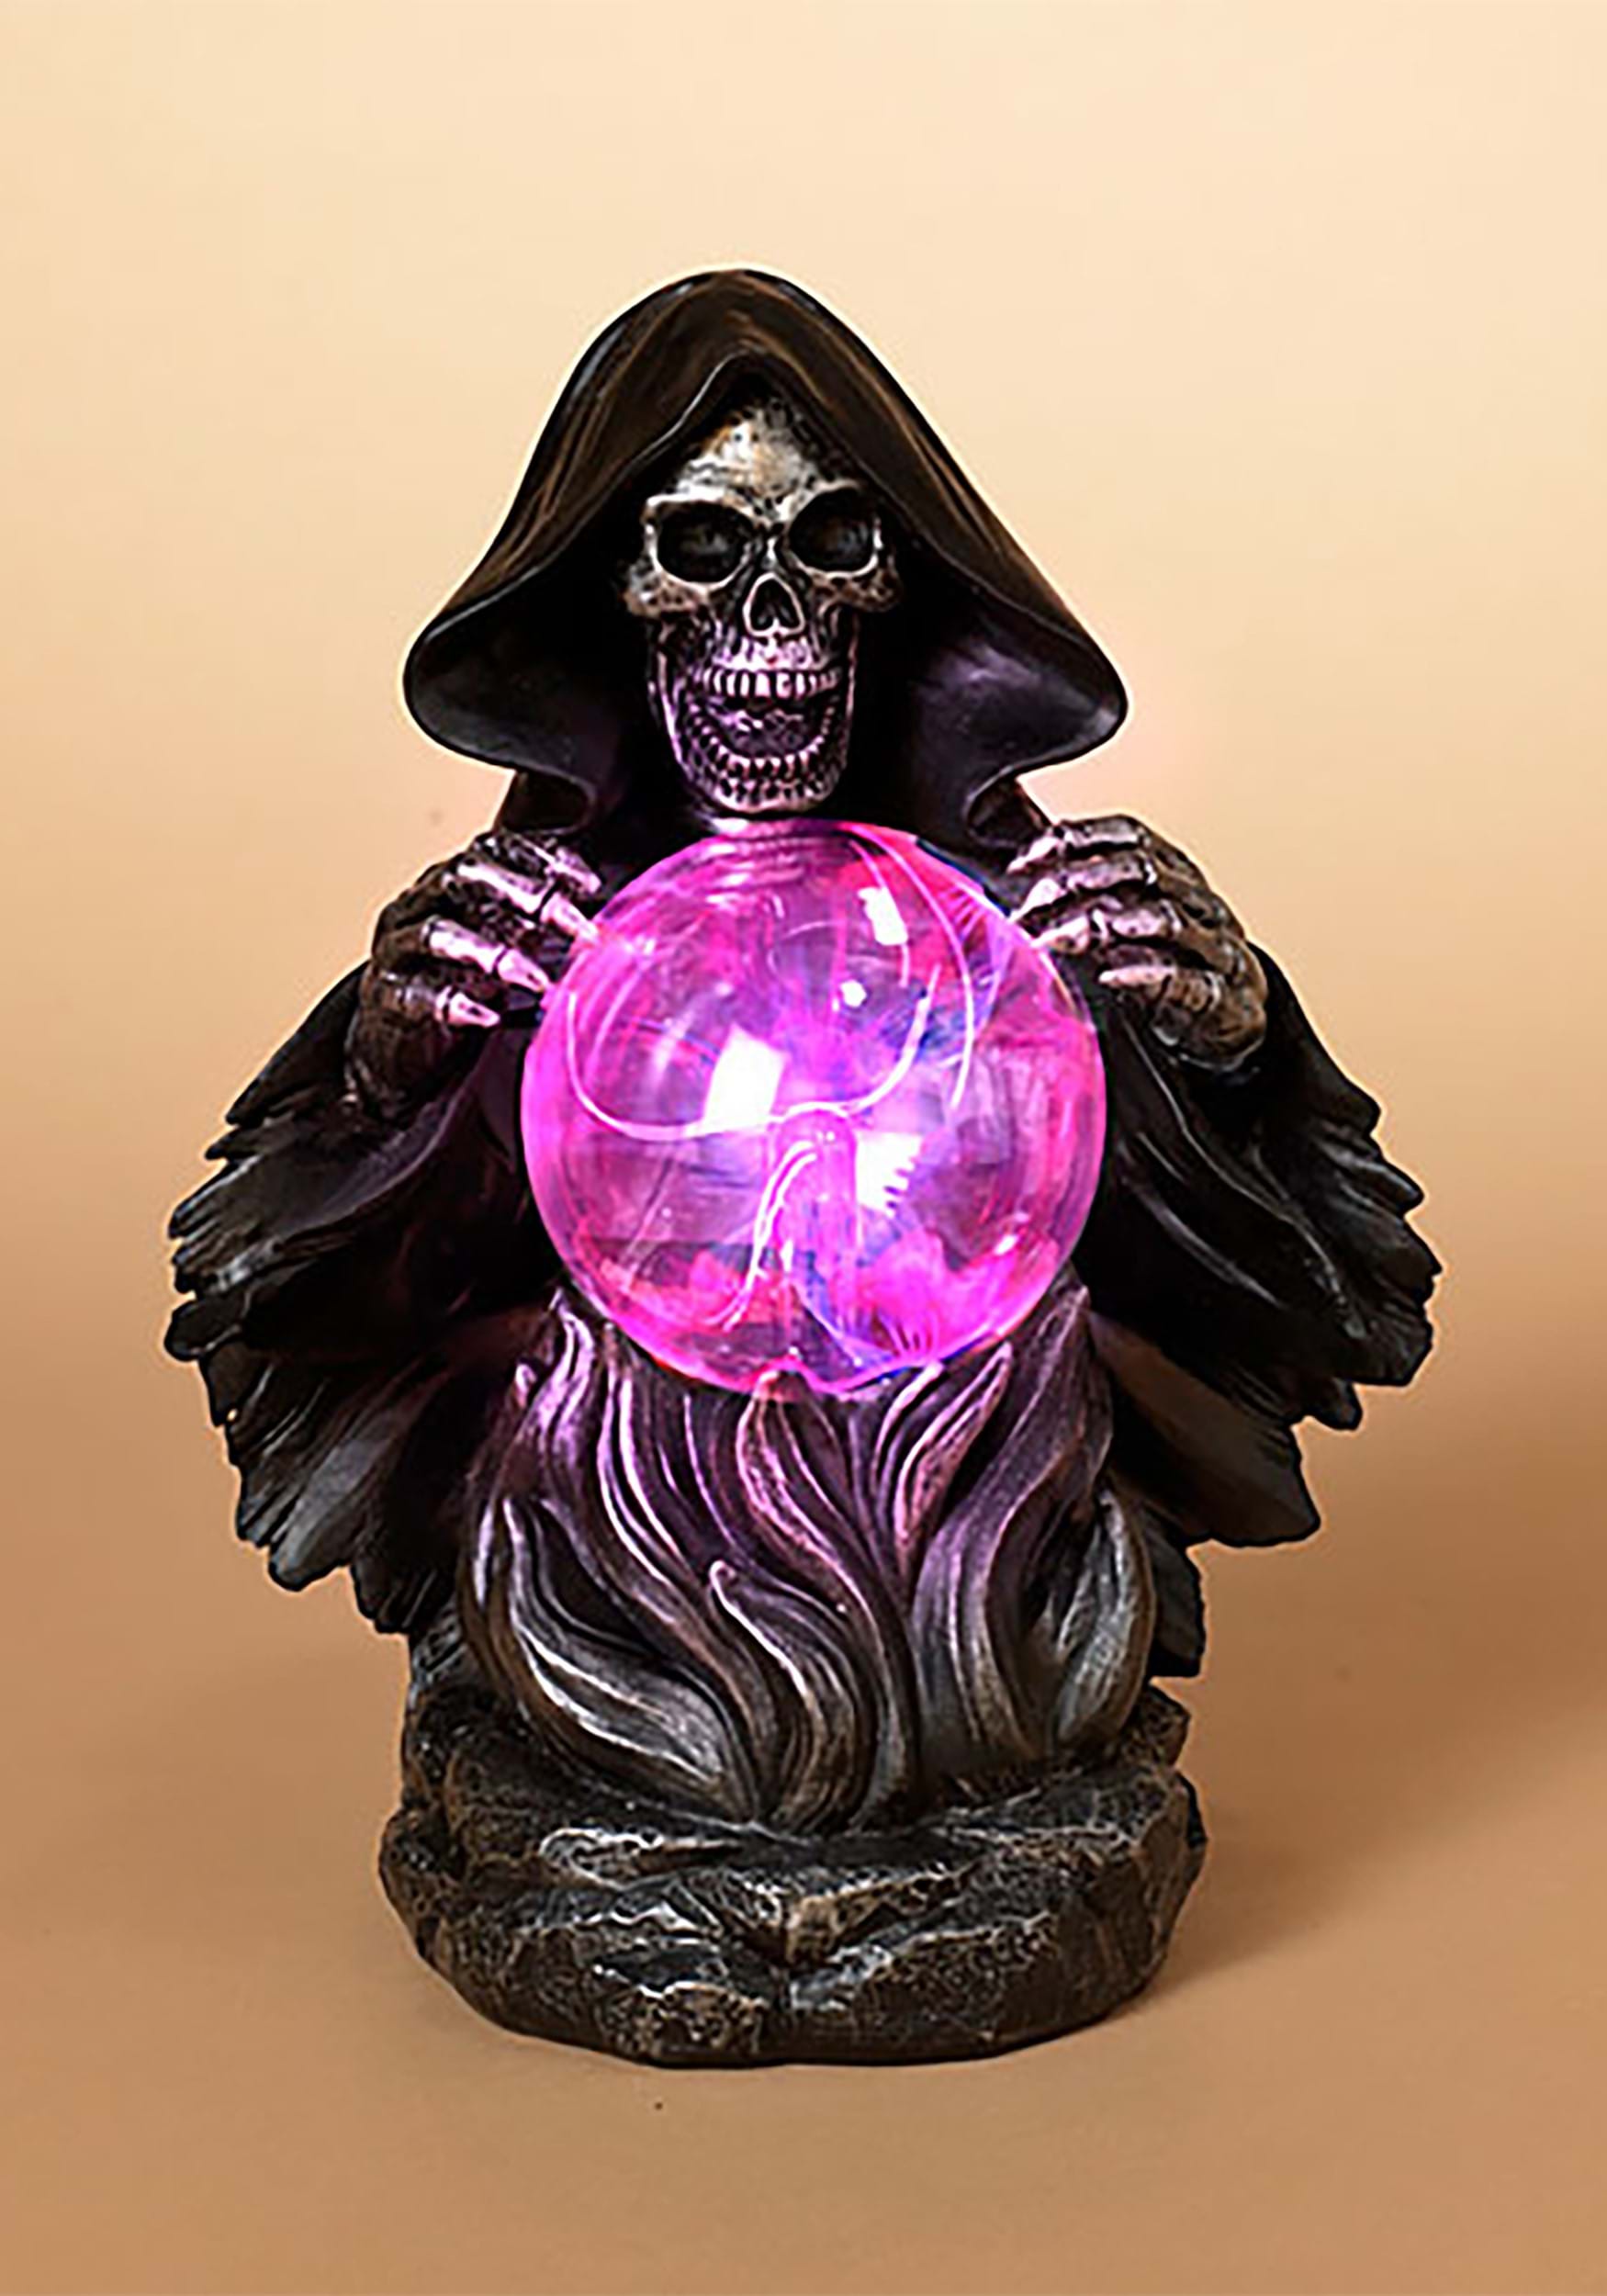 9 Inch Static Light Magic Ball Grim Reaper Decoration